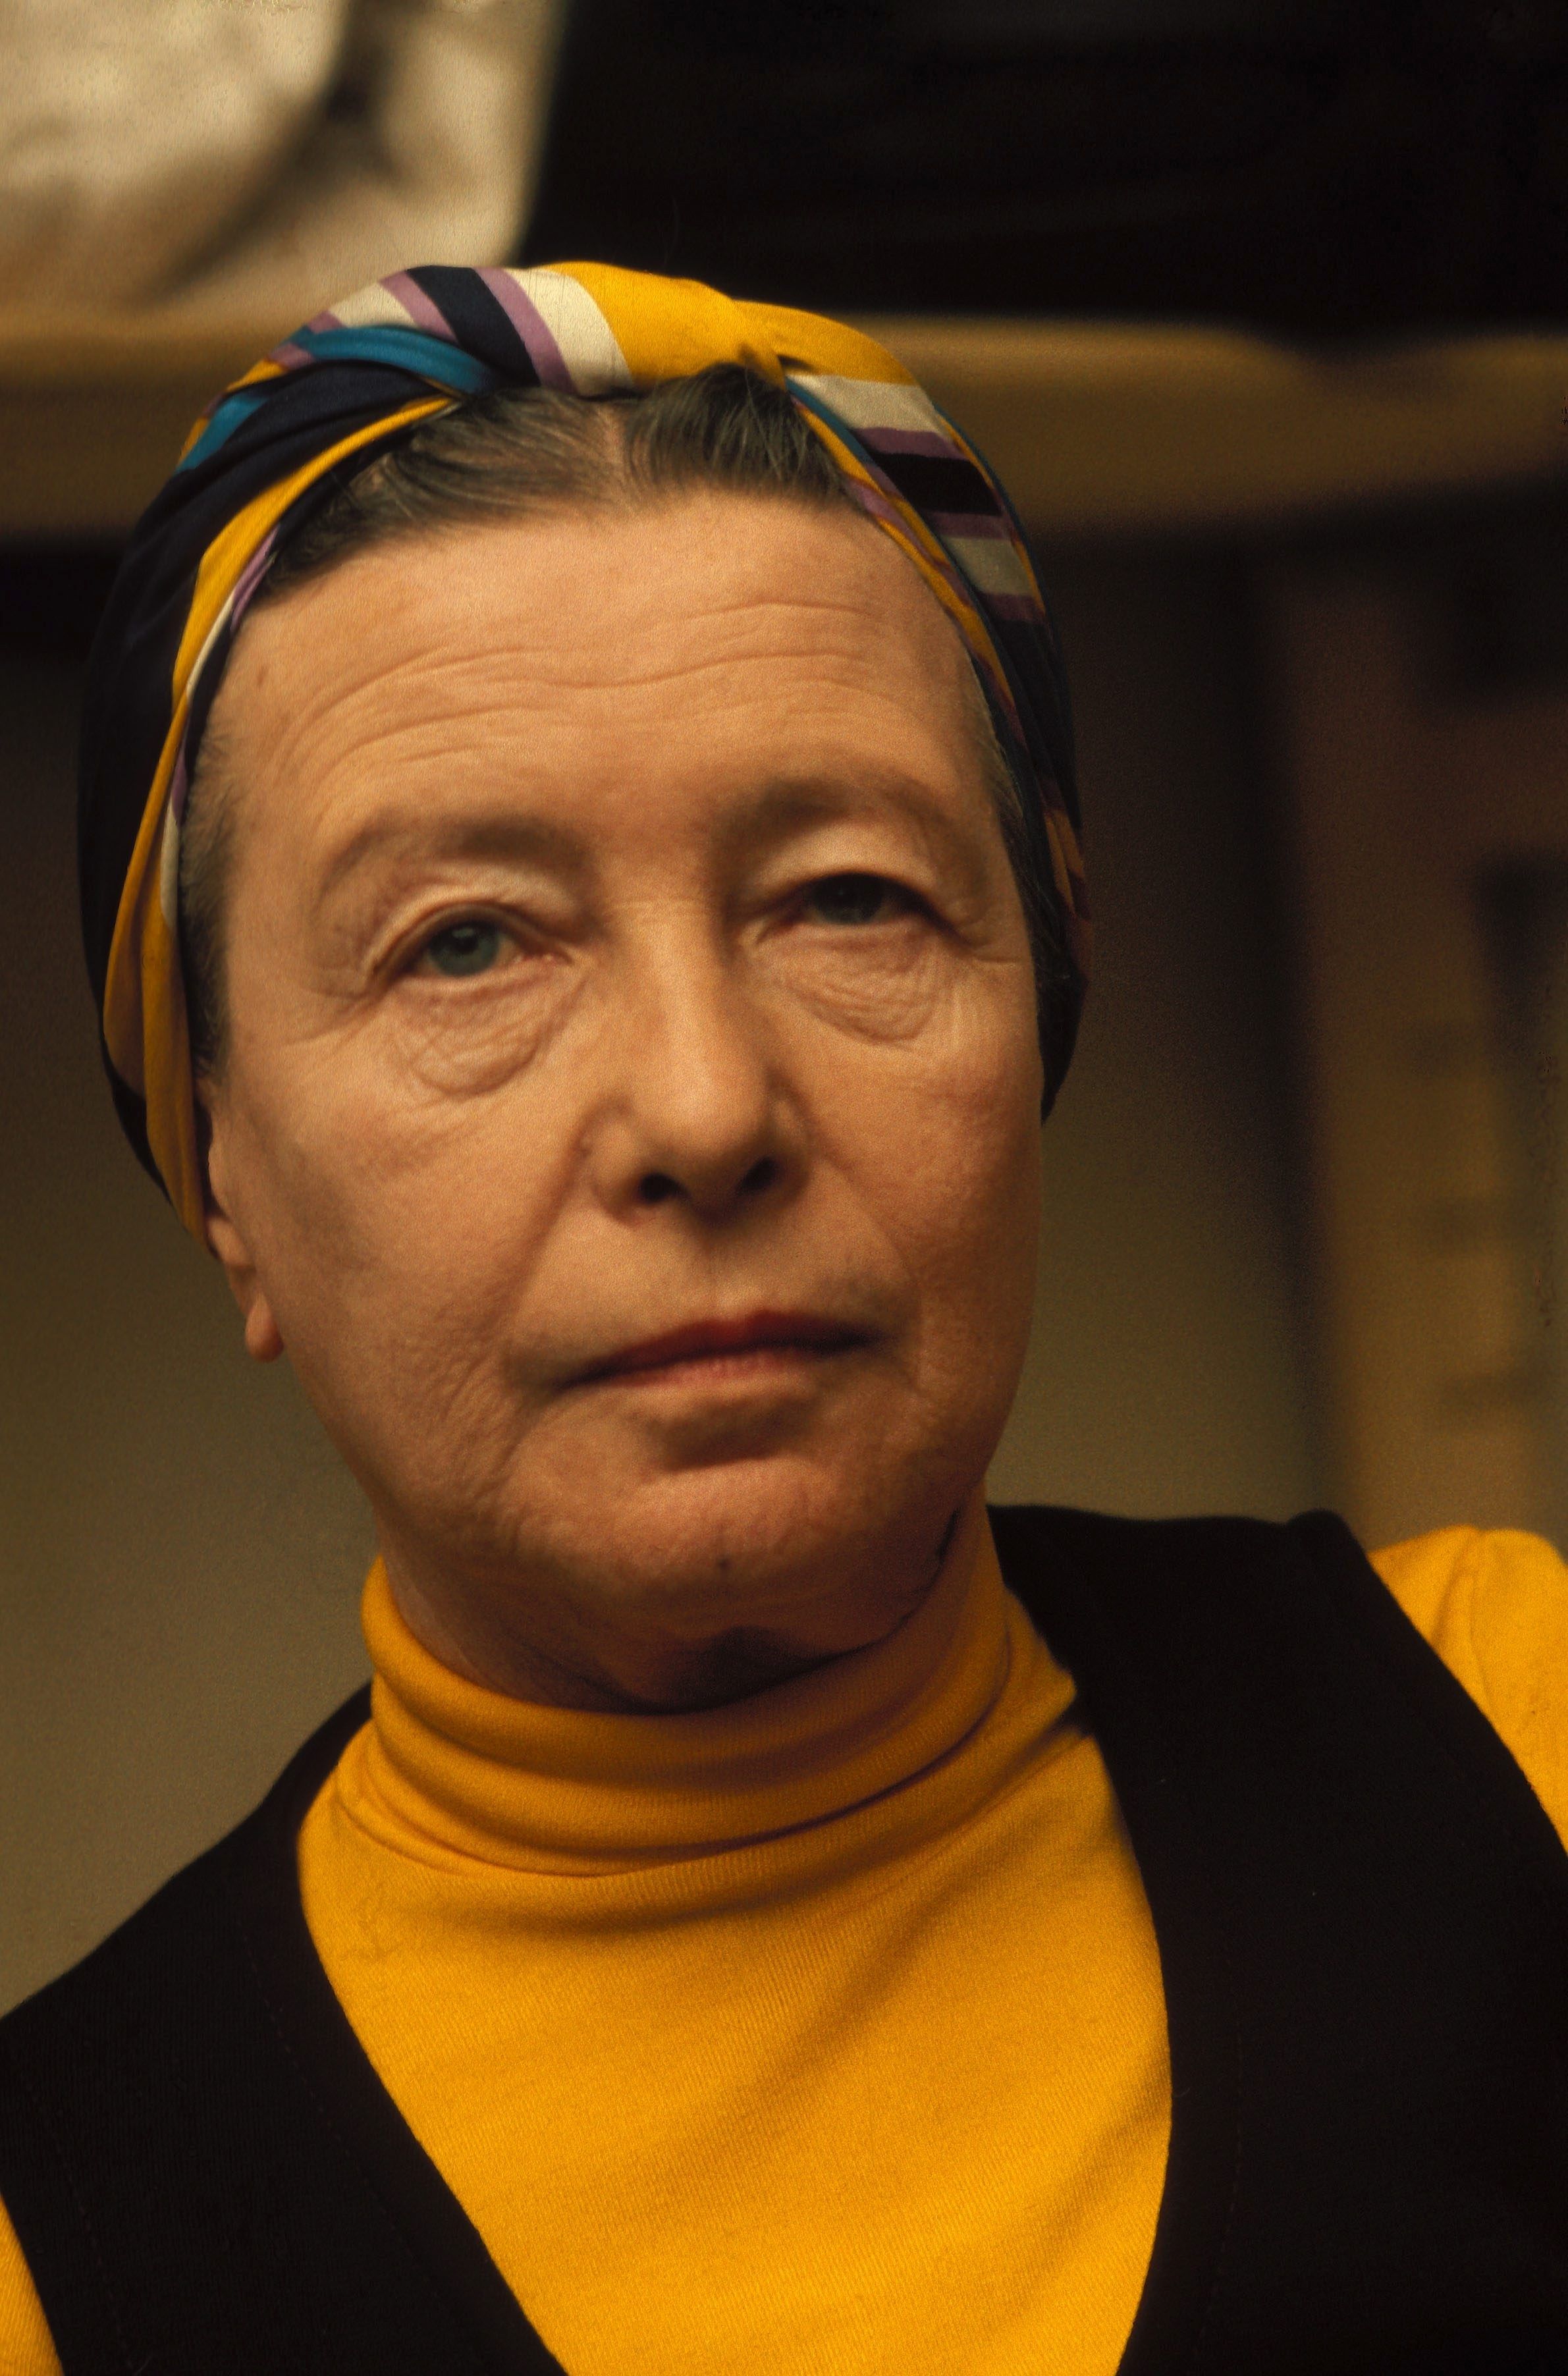 Las 17 mejores frases de Simone de Beauvoir para inspirarte